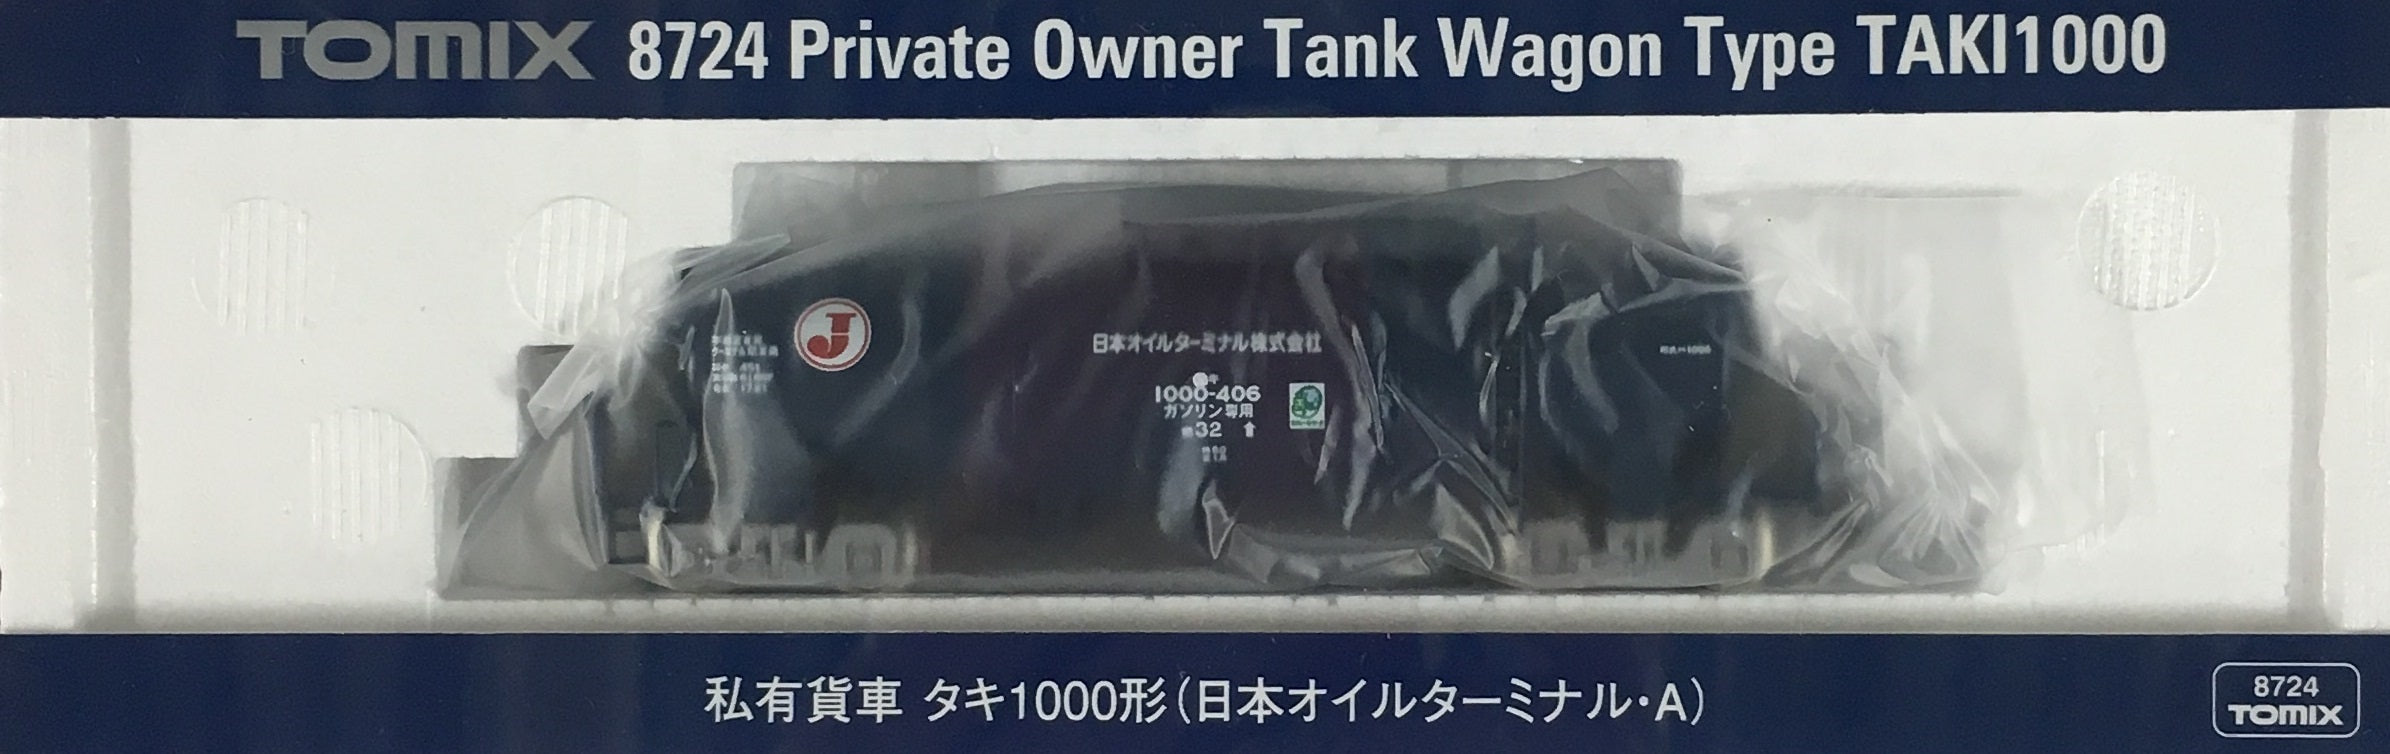 Private Owner Tank Wagon Type TAKI1000 Japan Oil Terminal/A